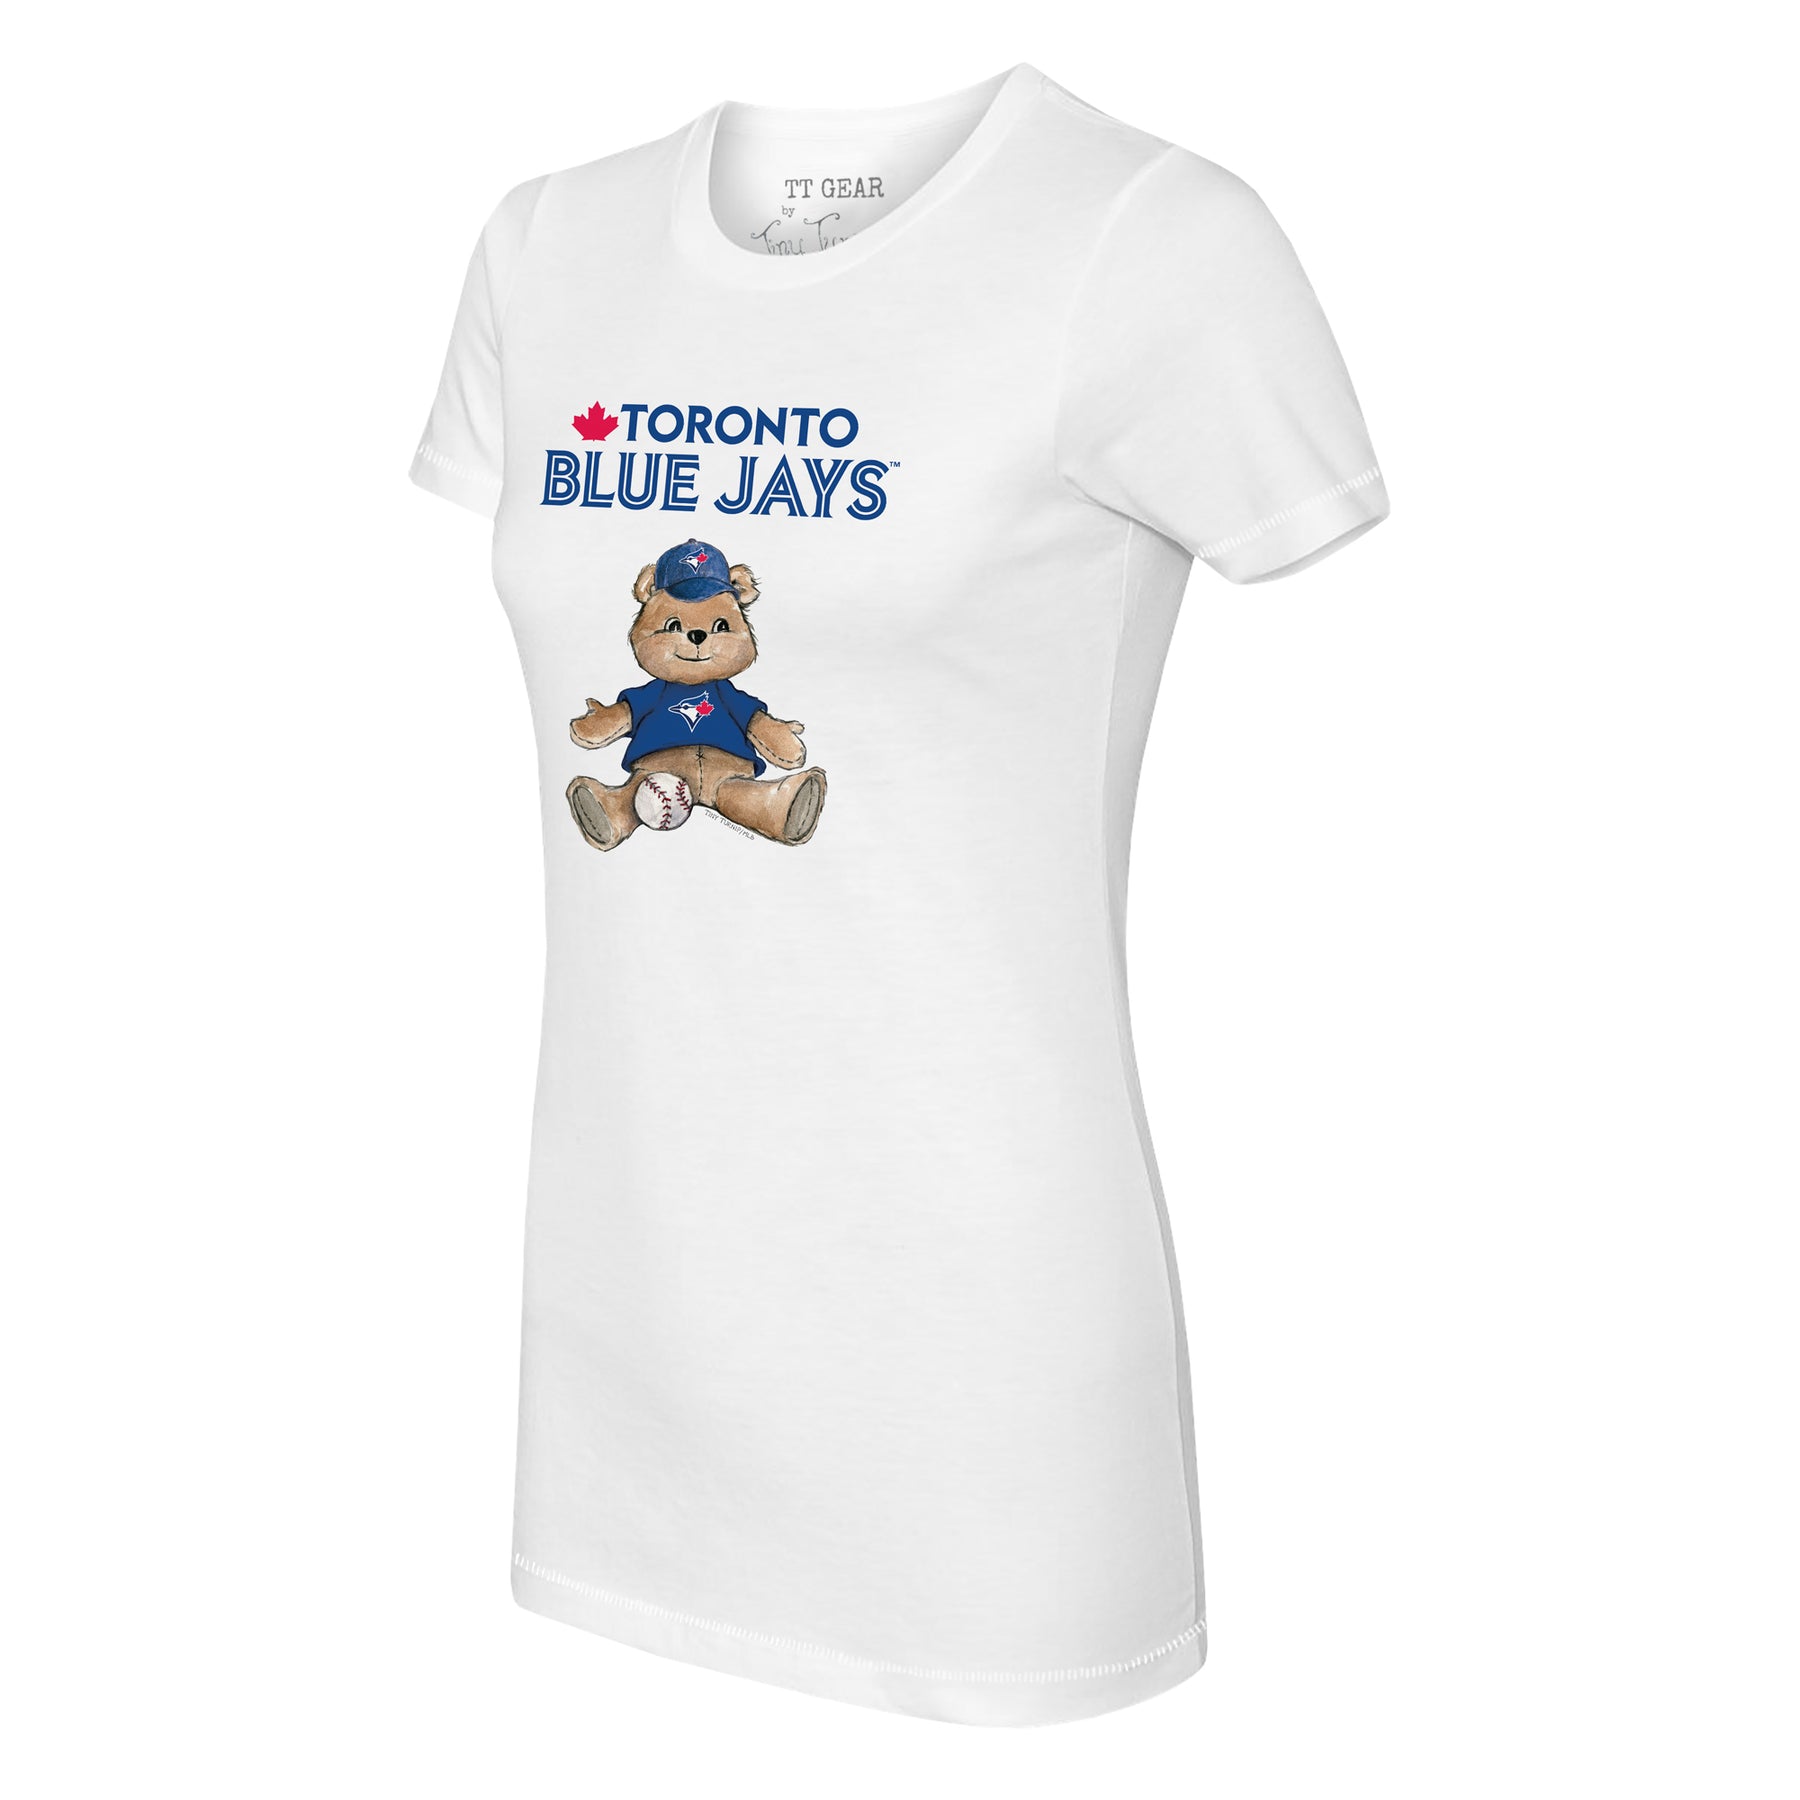 Toronto Blue Jays Boy Teddy Tee Shirt